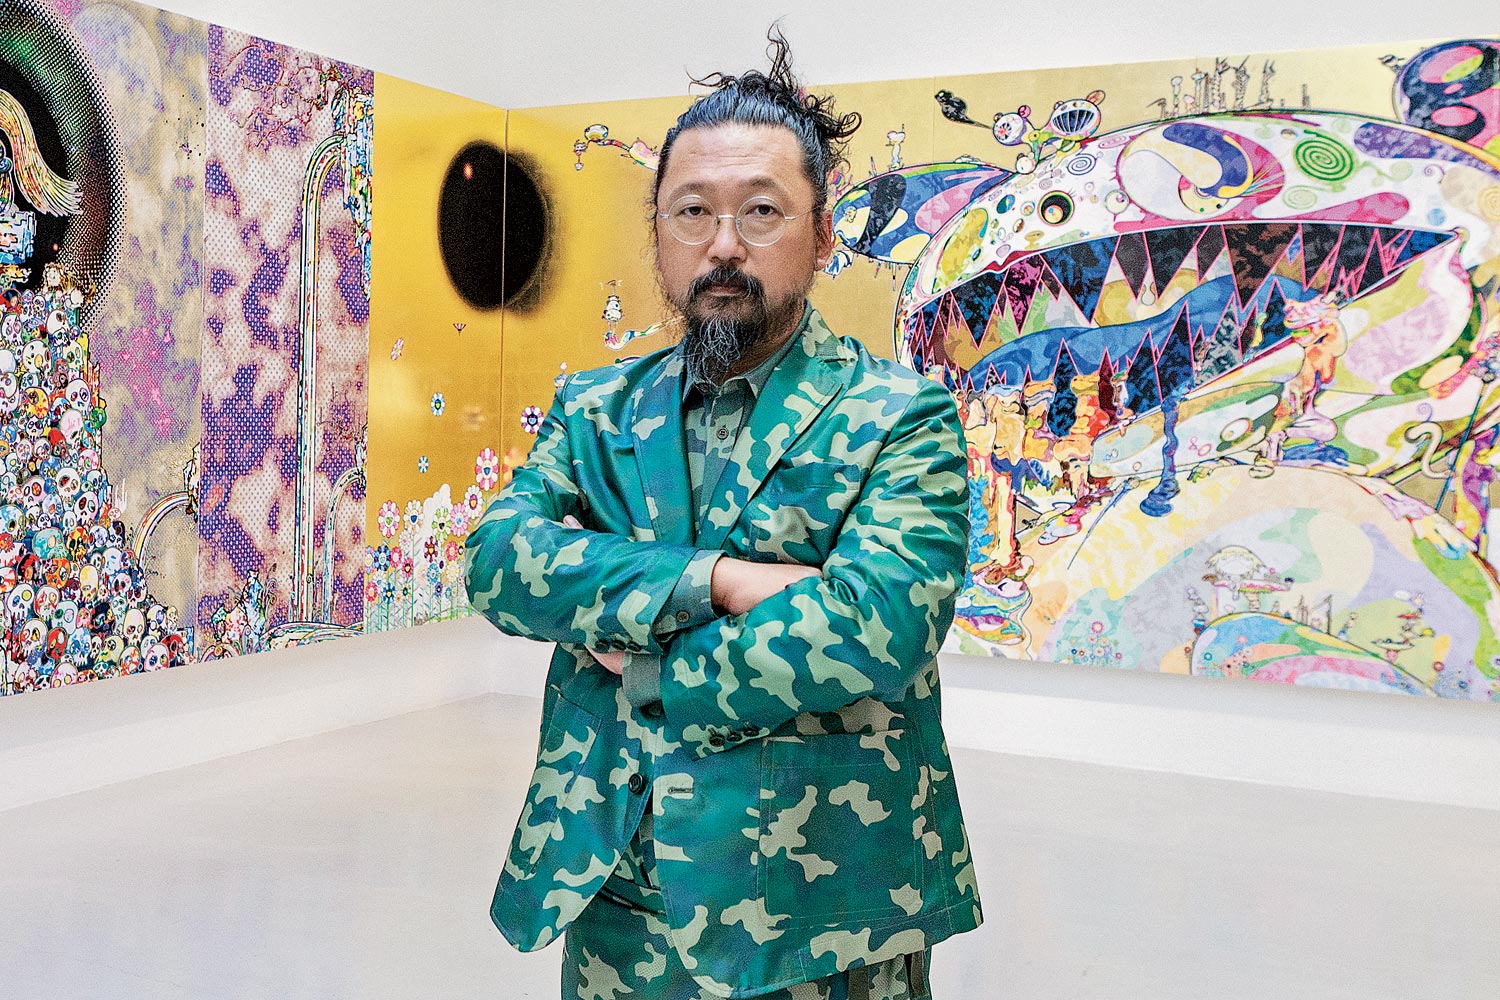 Takashi Murakami, artist behind Kanye West's Graduation cover